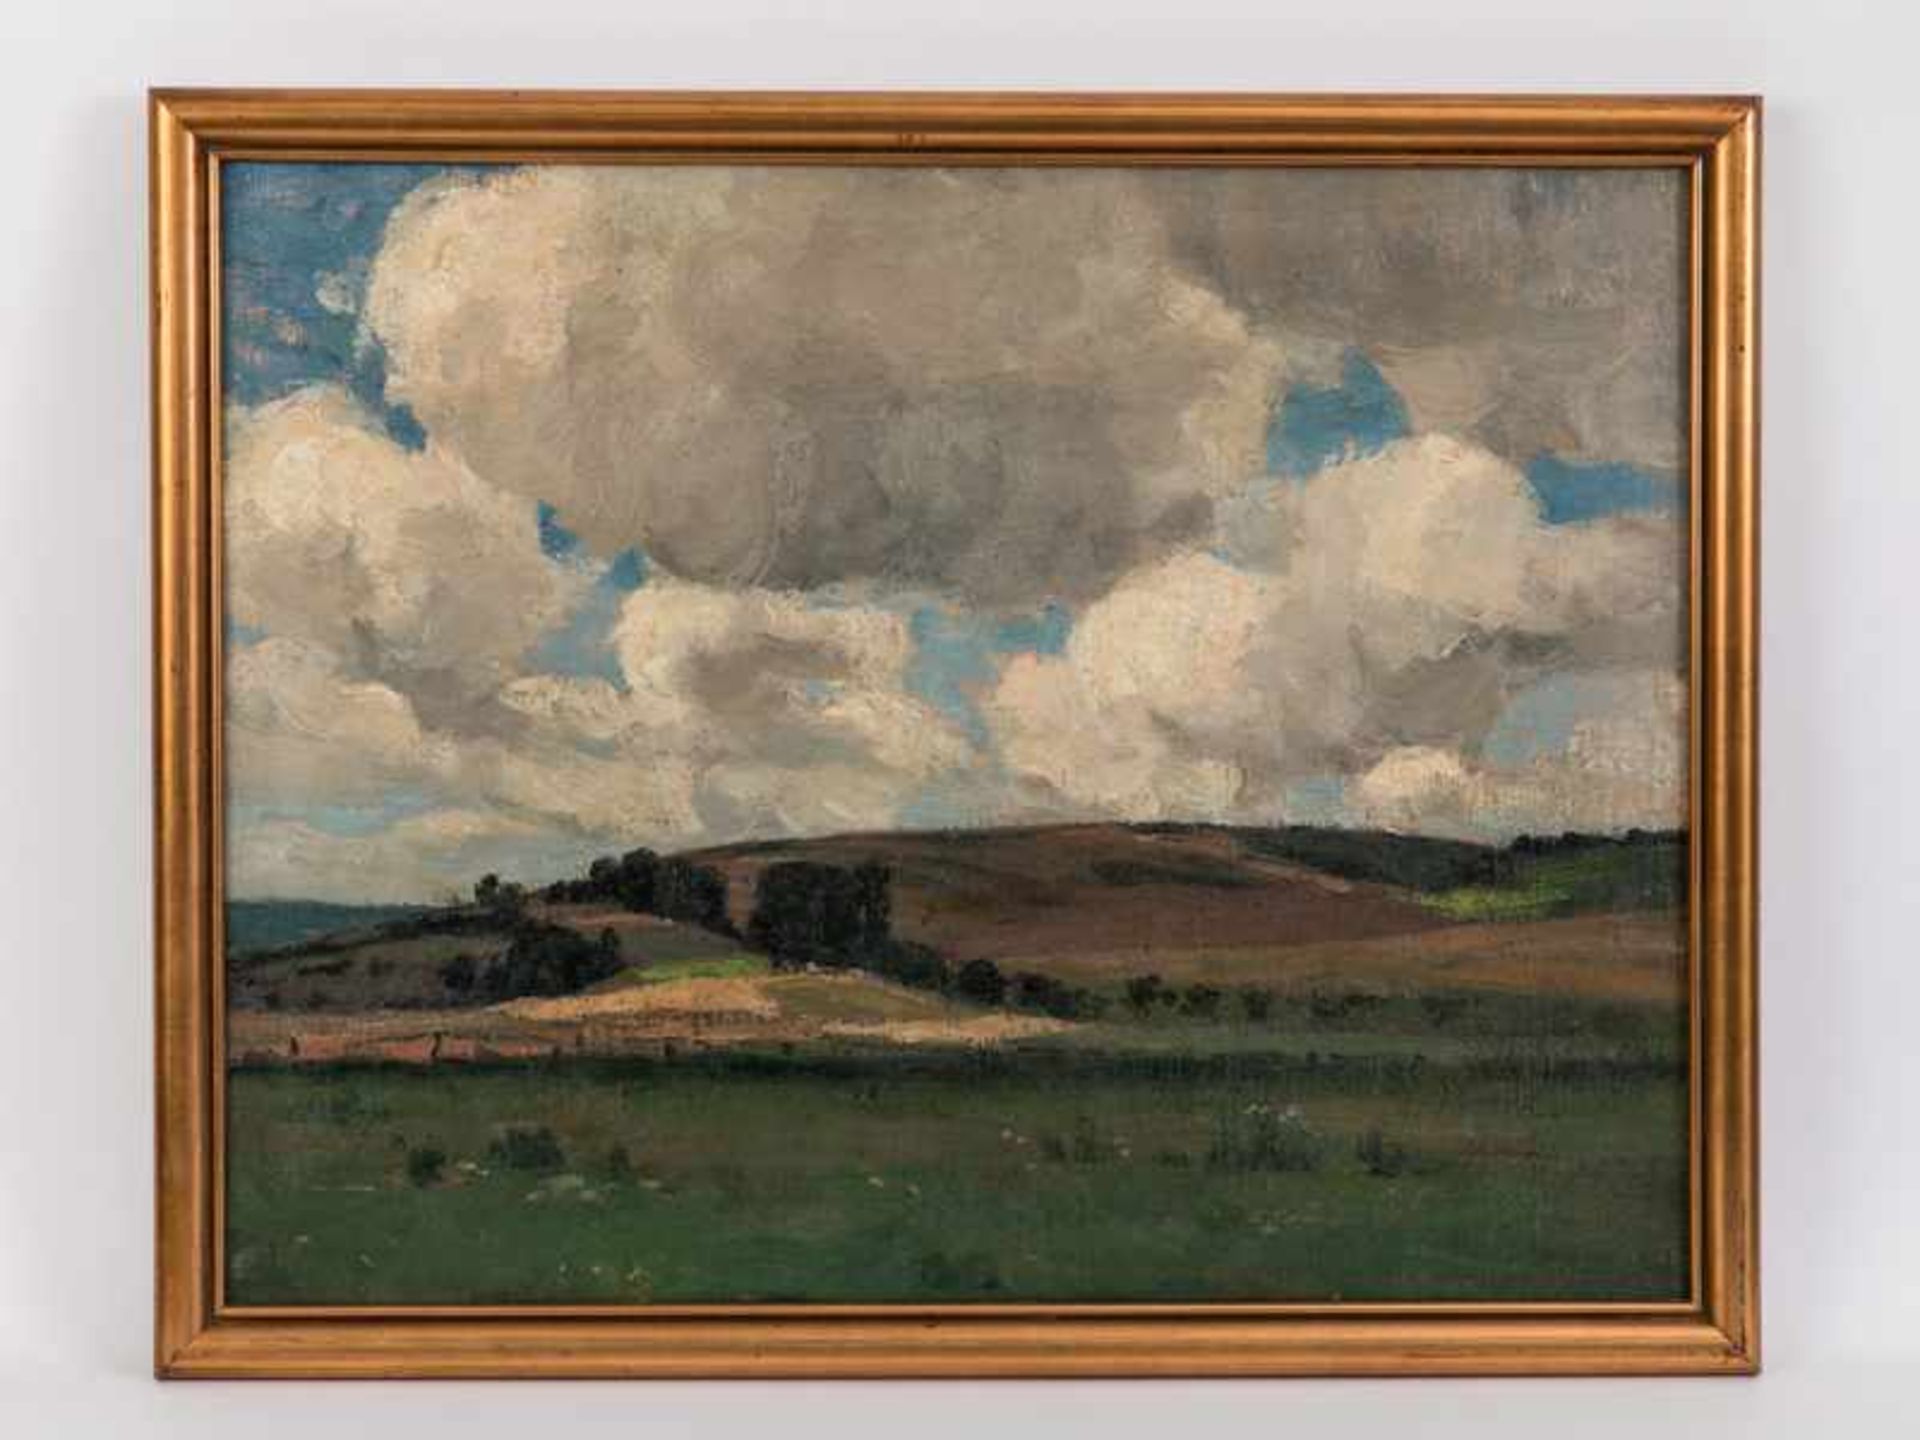 Crodel, Paul Eduard (1862 - 1928), Nachlaß. Öl auf Leinwand; "Lüneburger Heide", hügelige Heide-